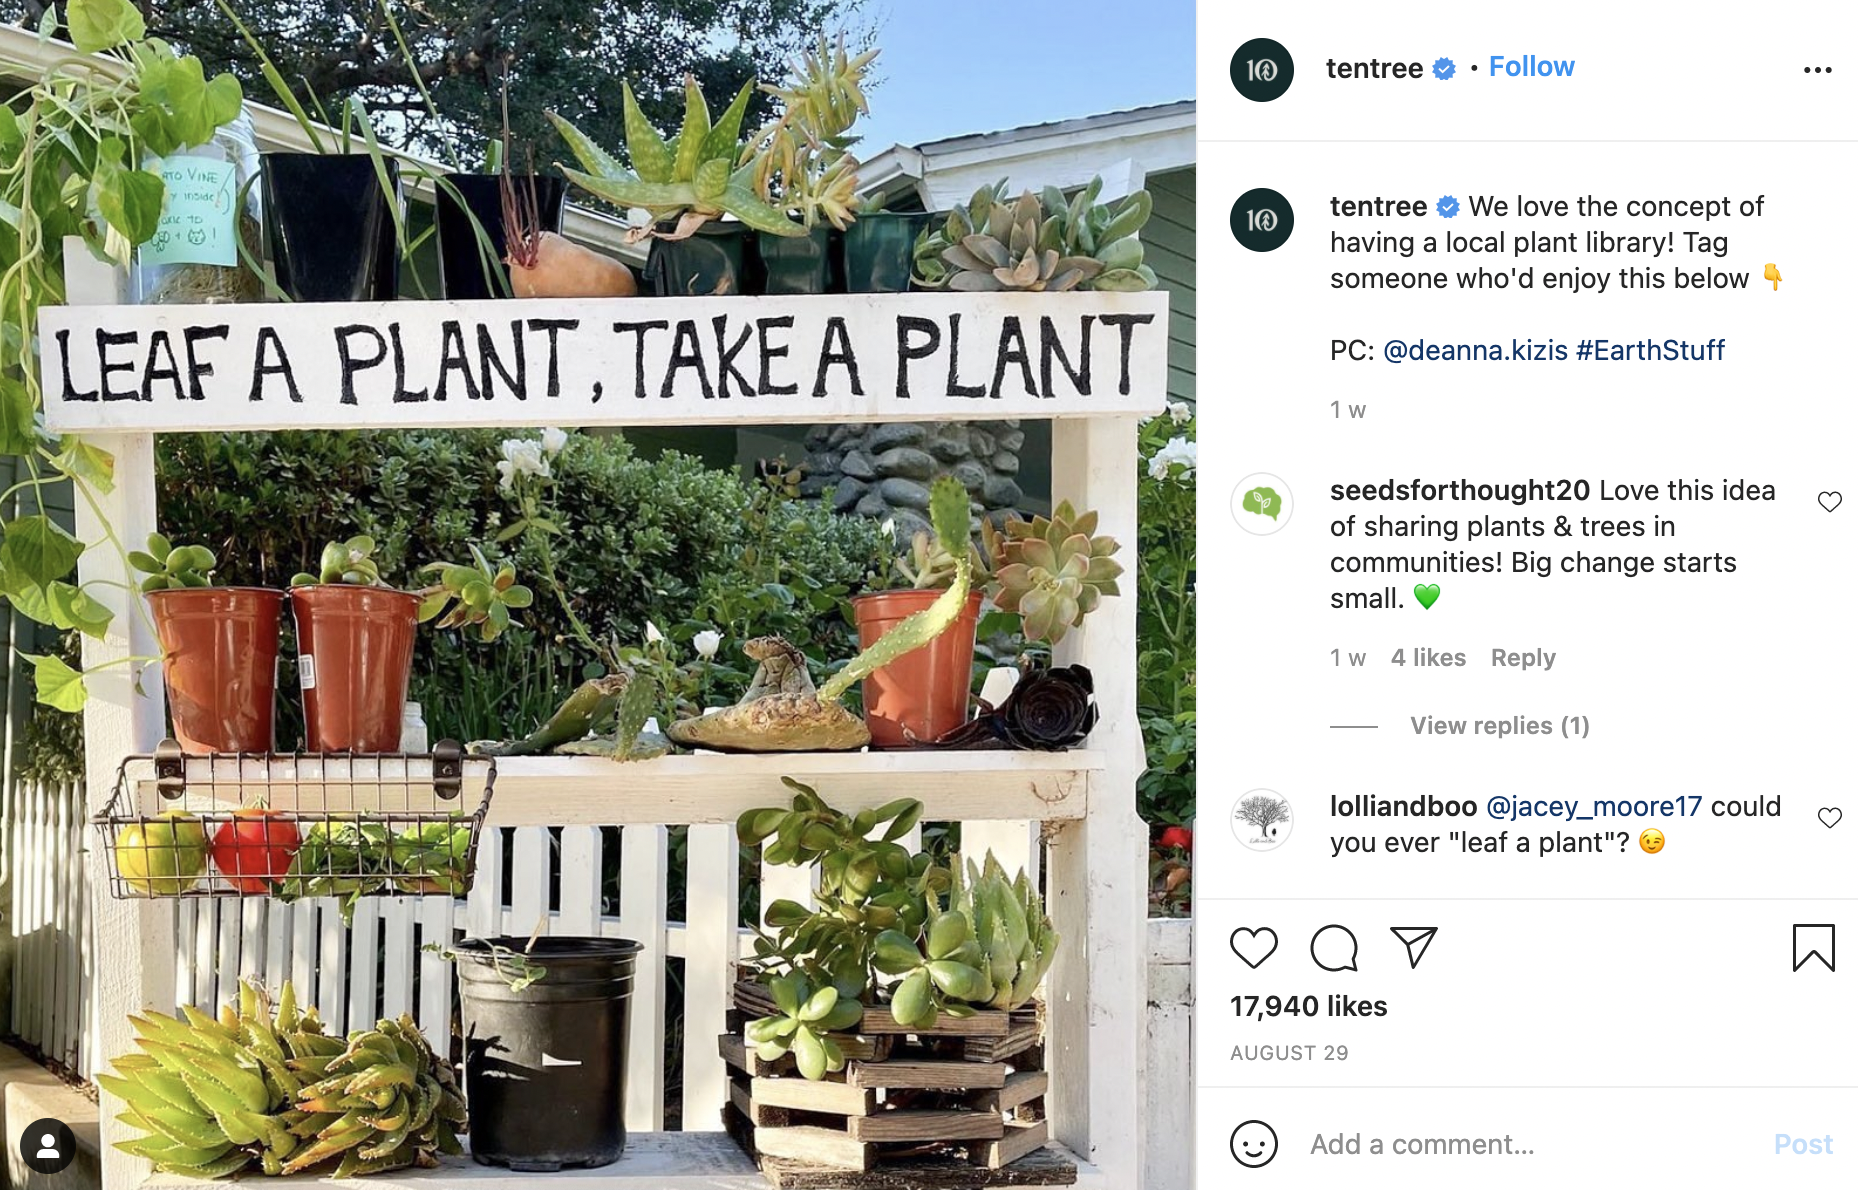 Tentree Instagram post "Leaf a Plant, Take a Plant"